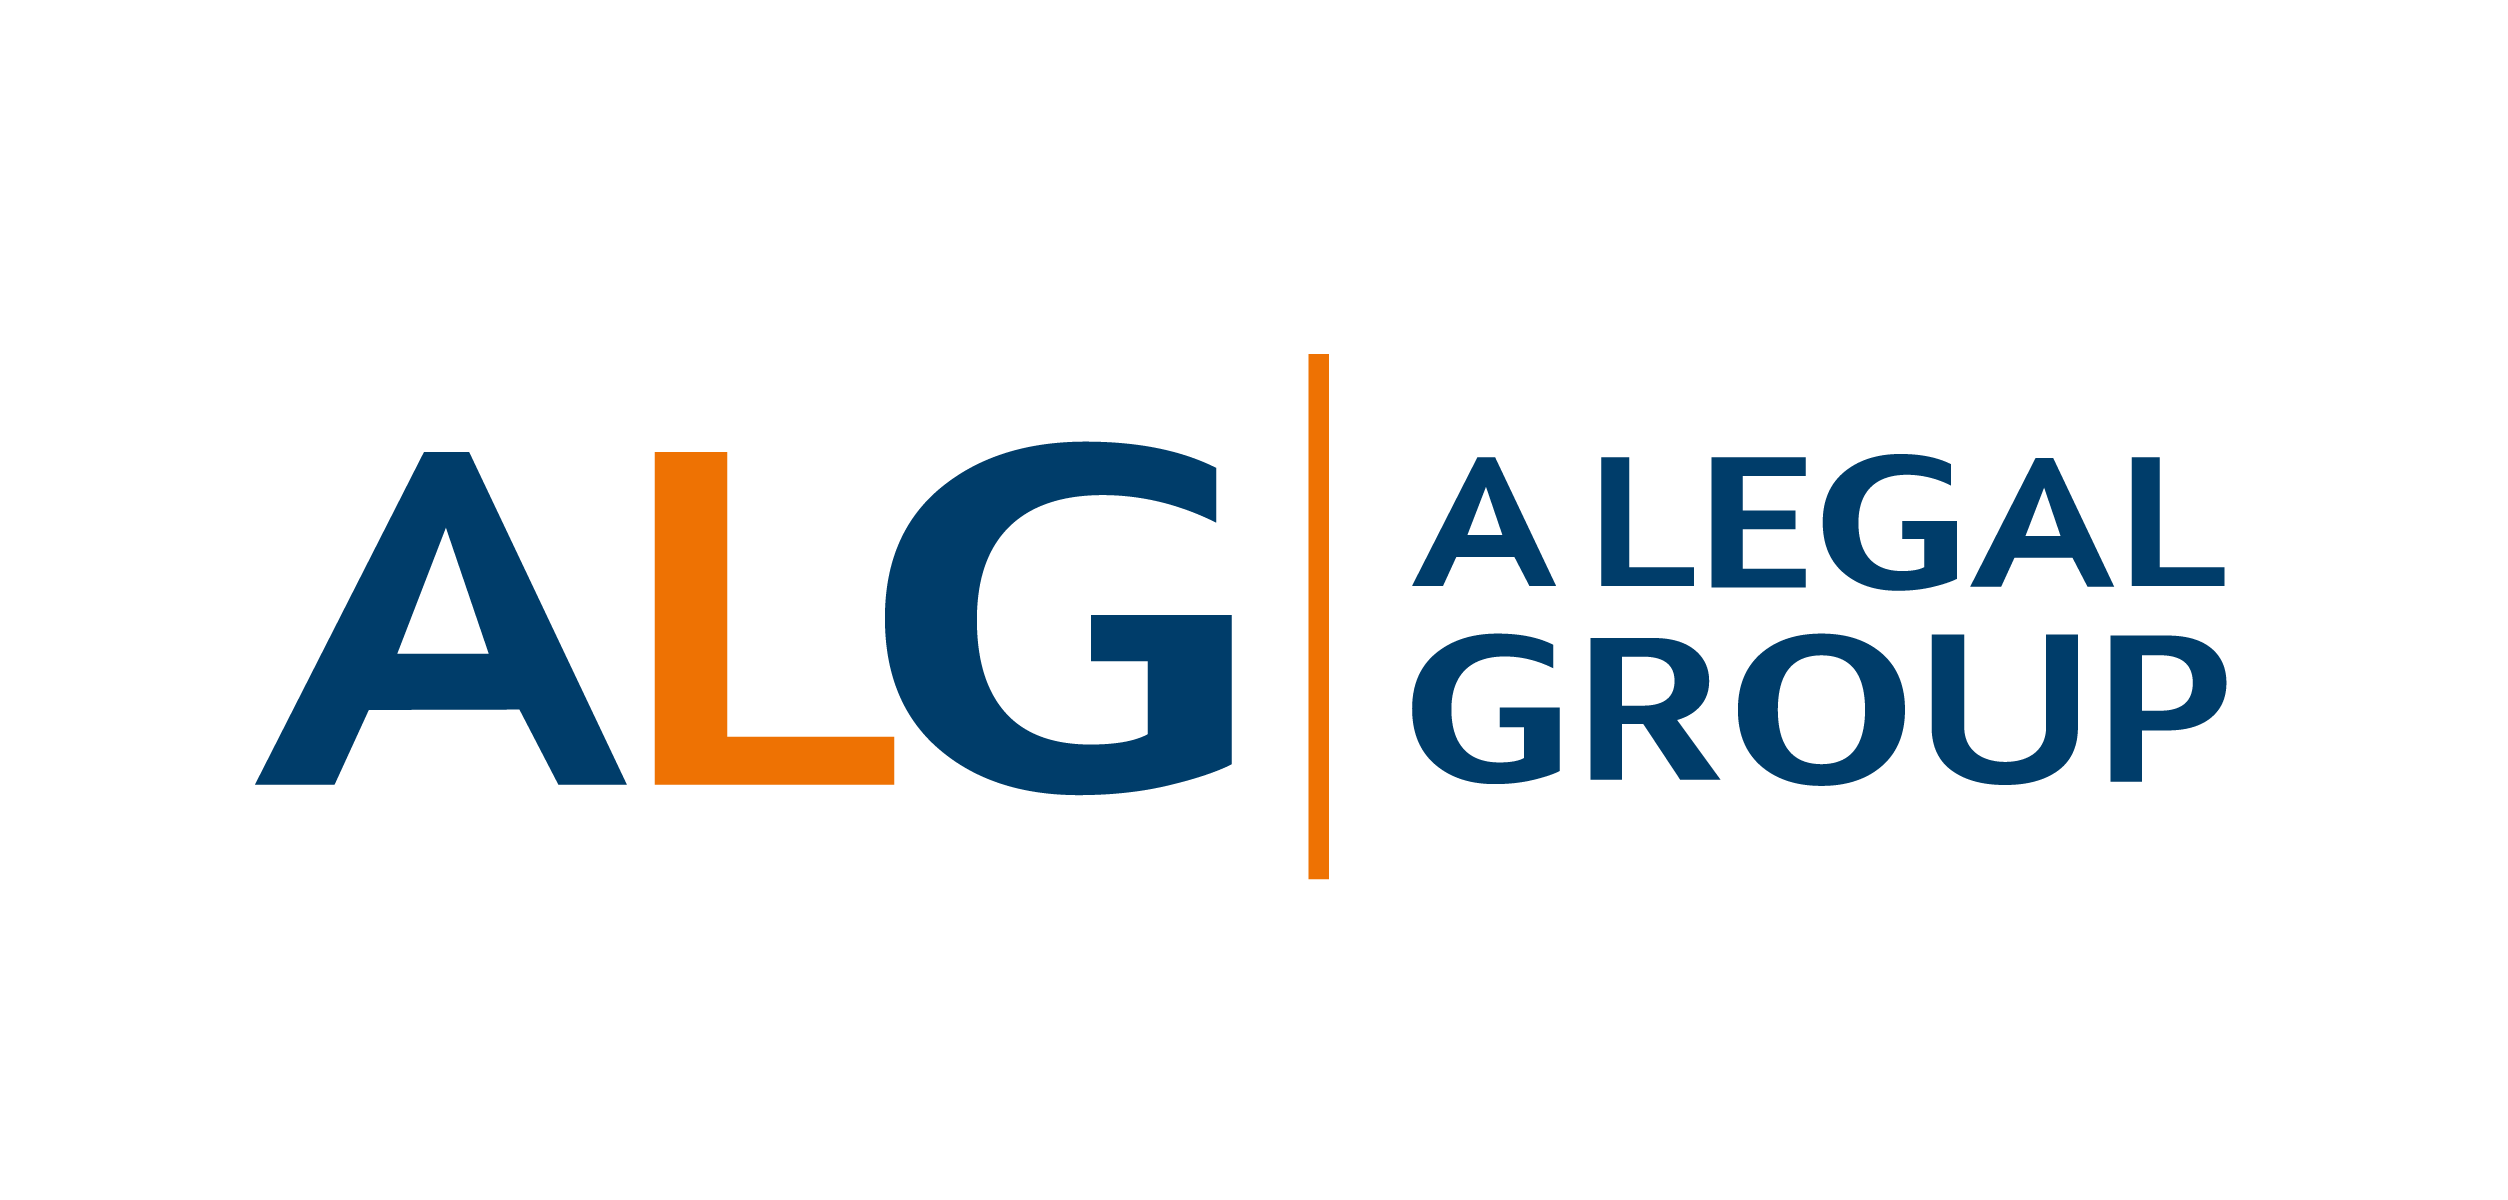 A Legal Group